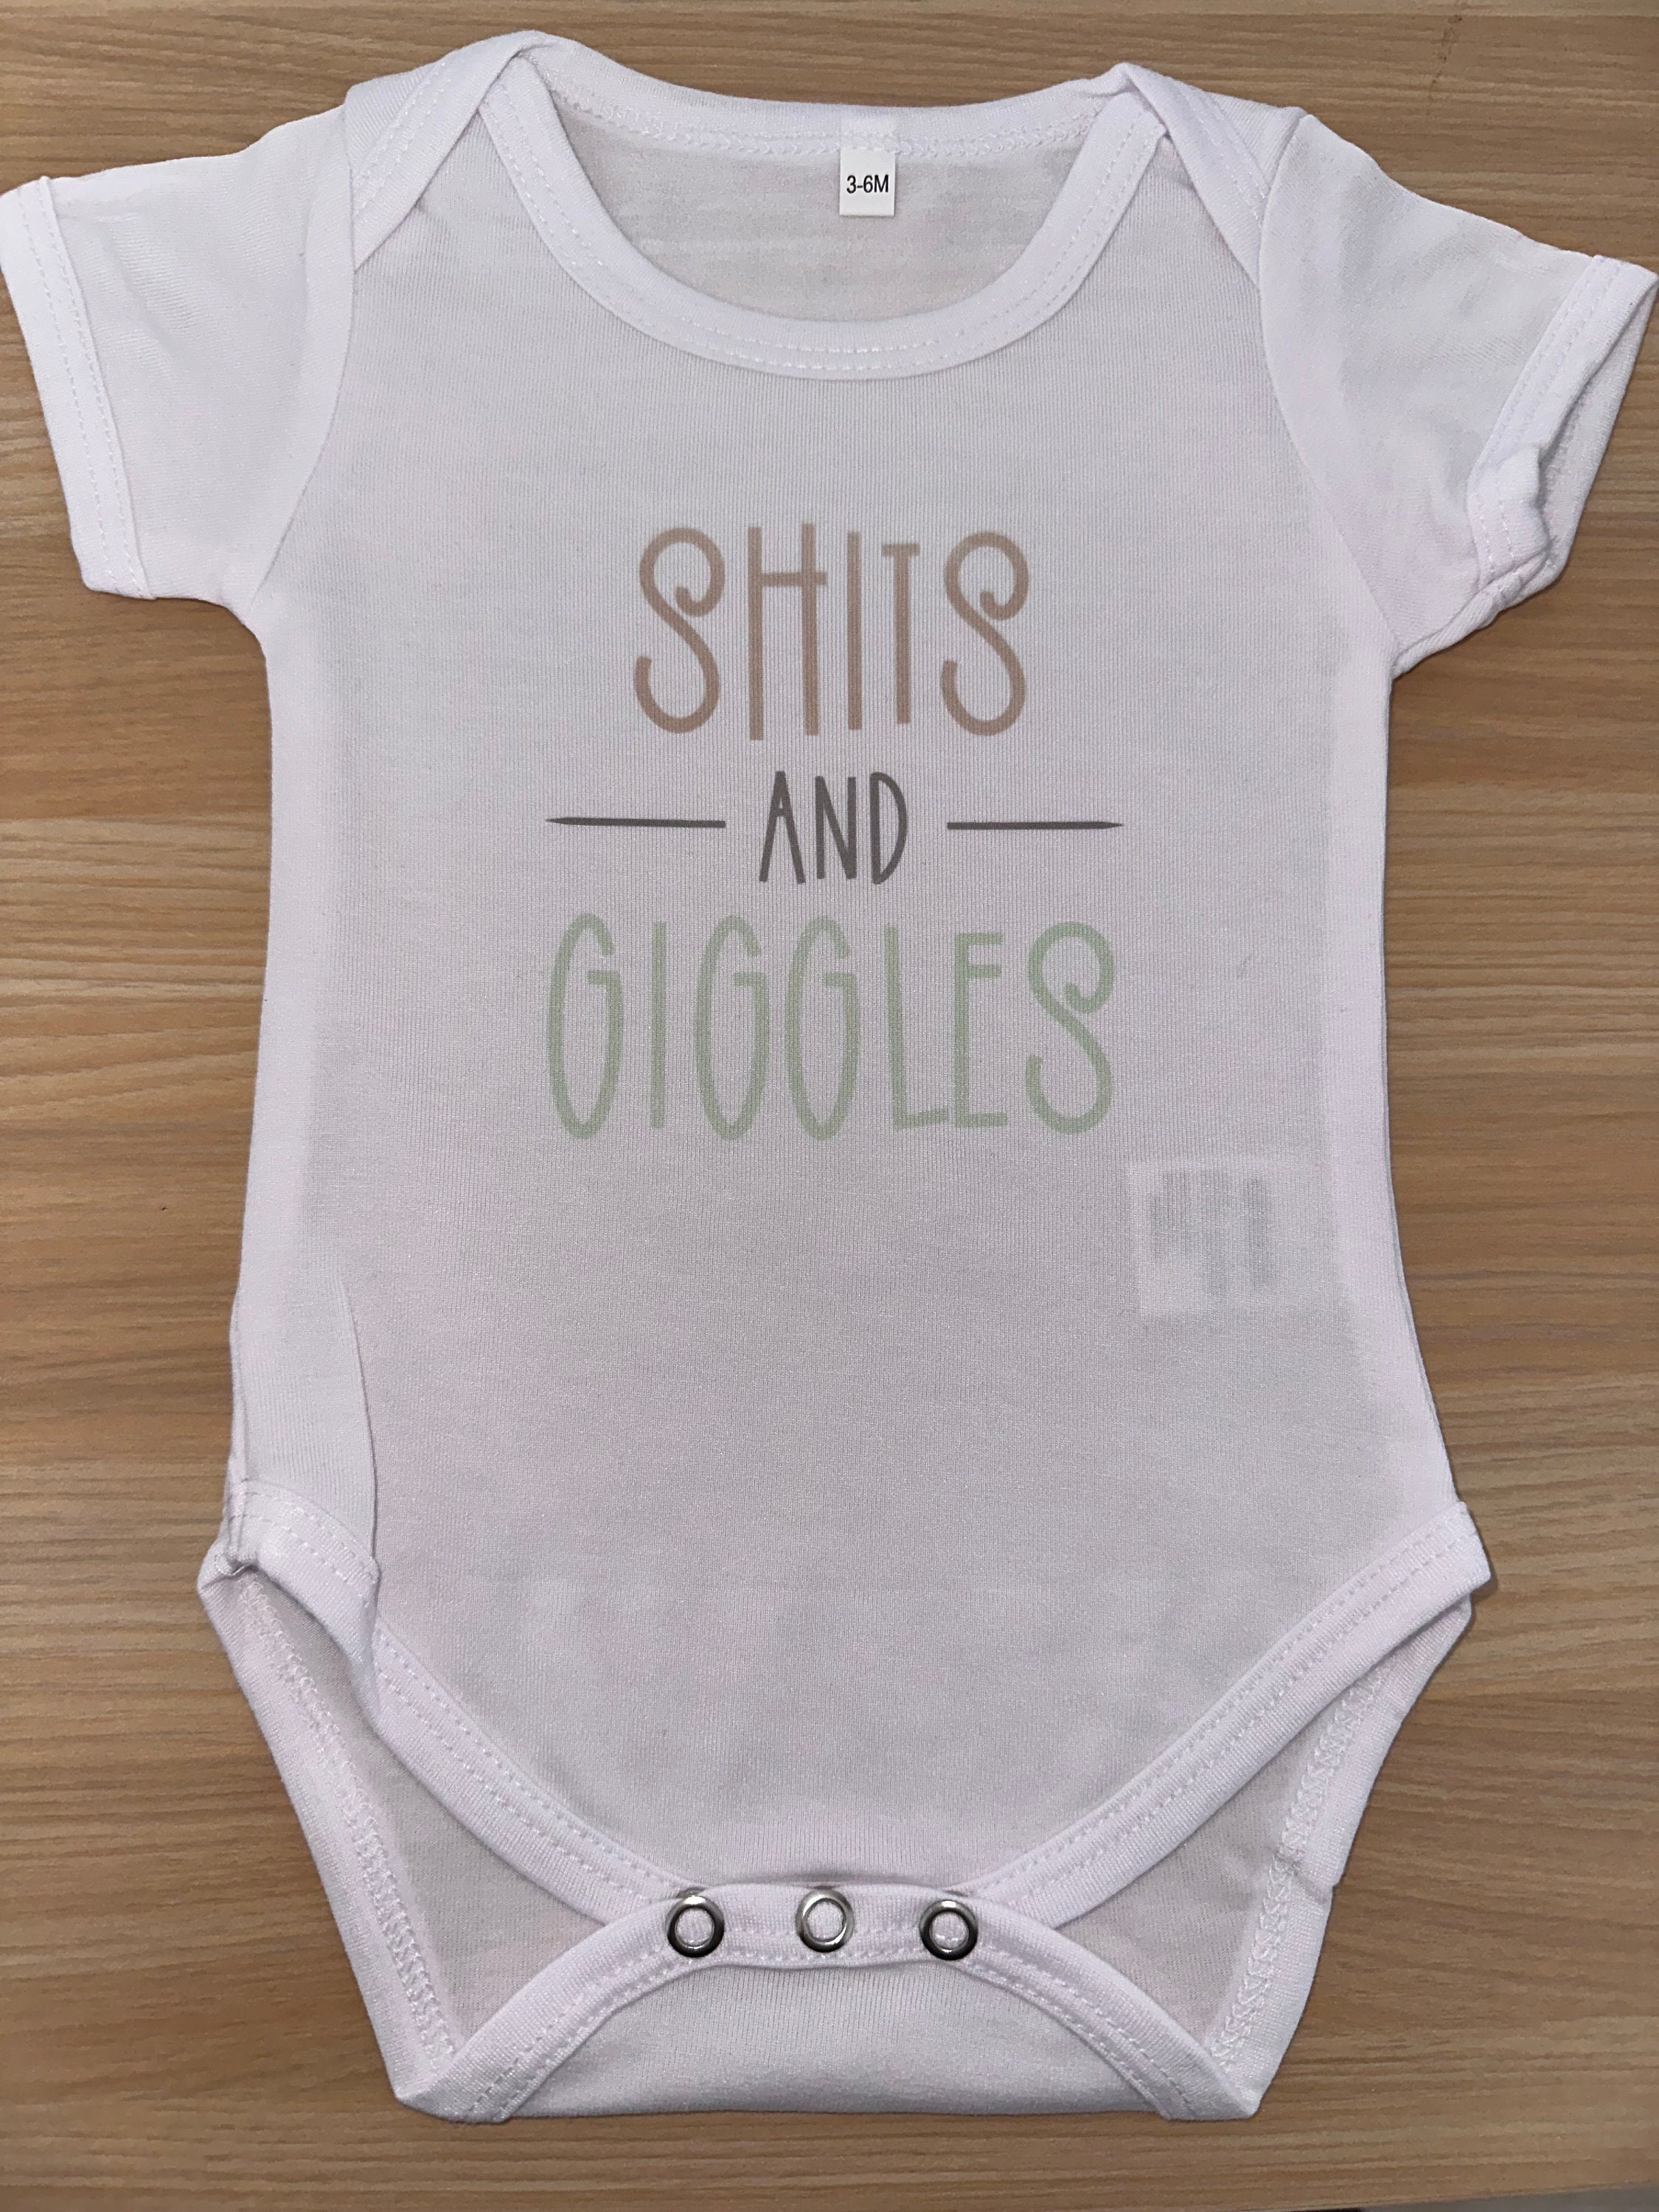 Boobivore Baby Bodysuit Adorable Breastfeeding Advocate Baby Clothing  Breastfeeding Awareness Breastfed Baby Shower Gift Idea New Mom Humor